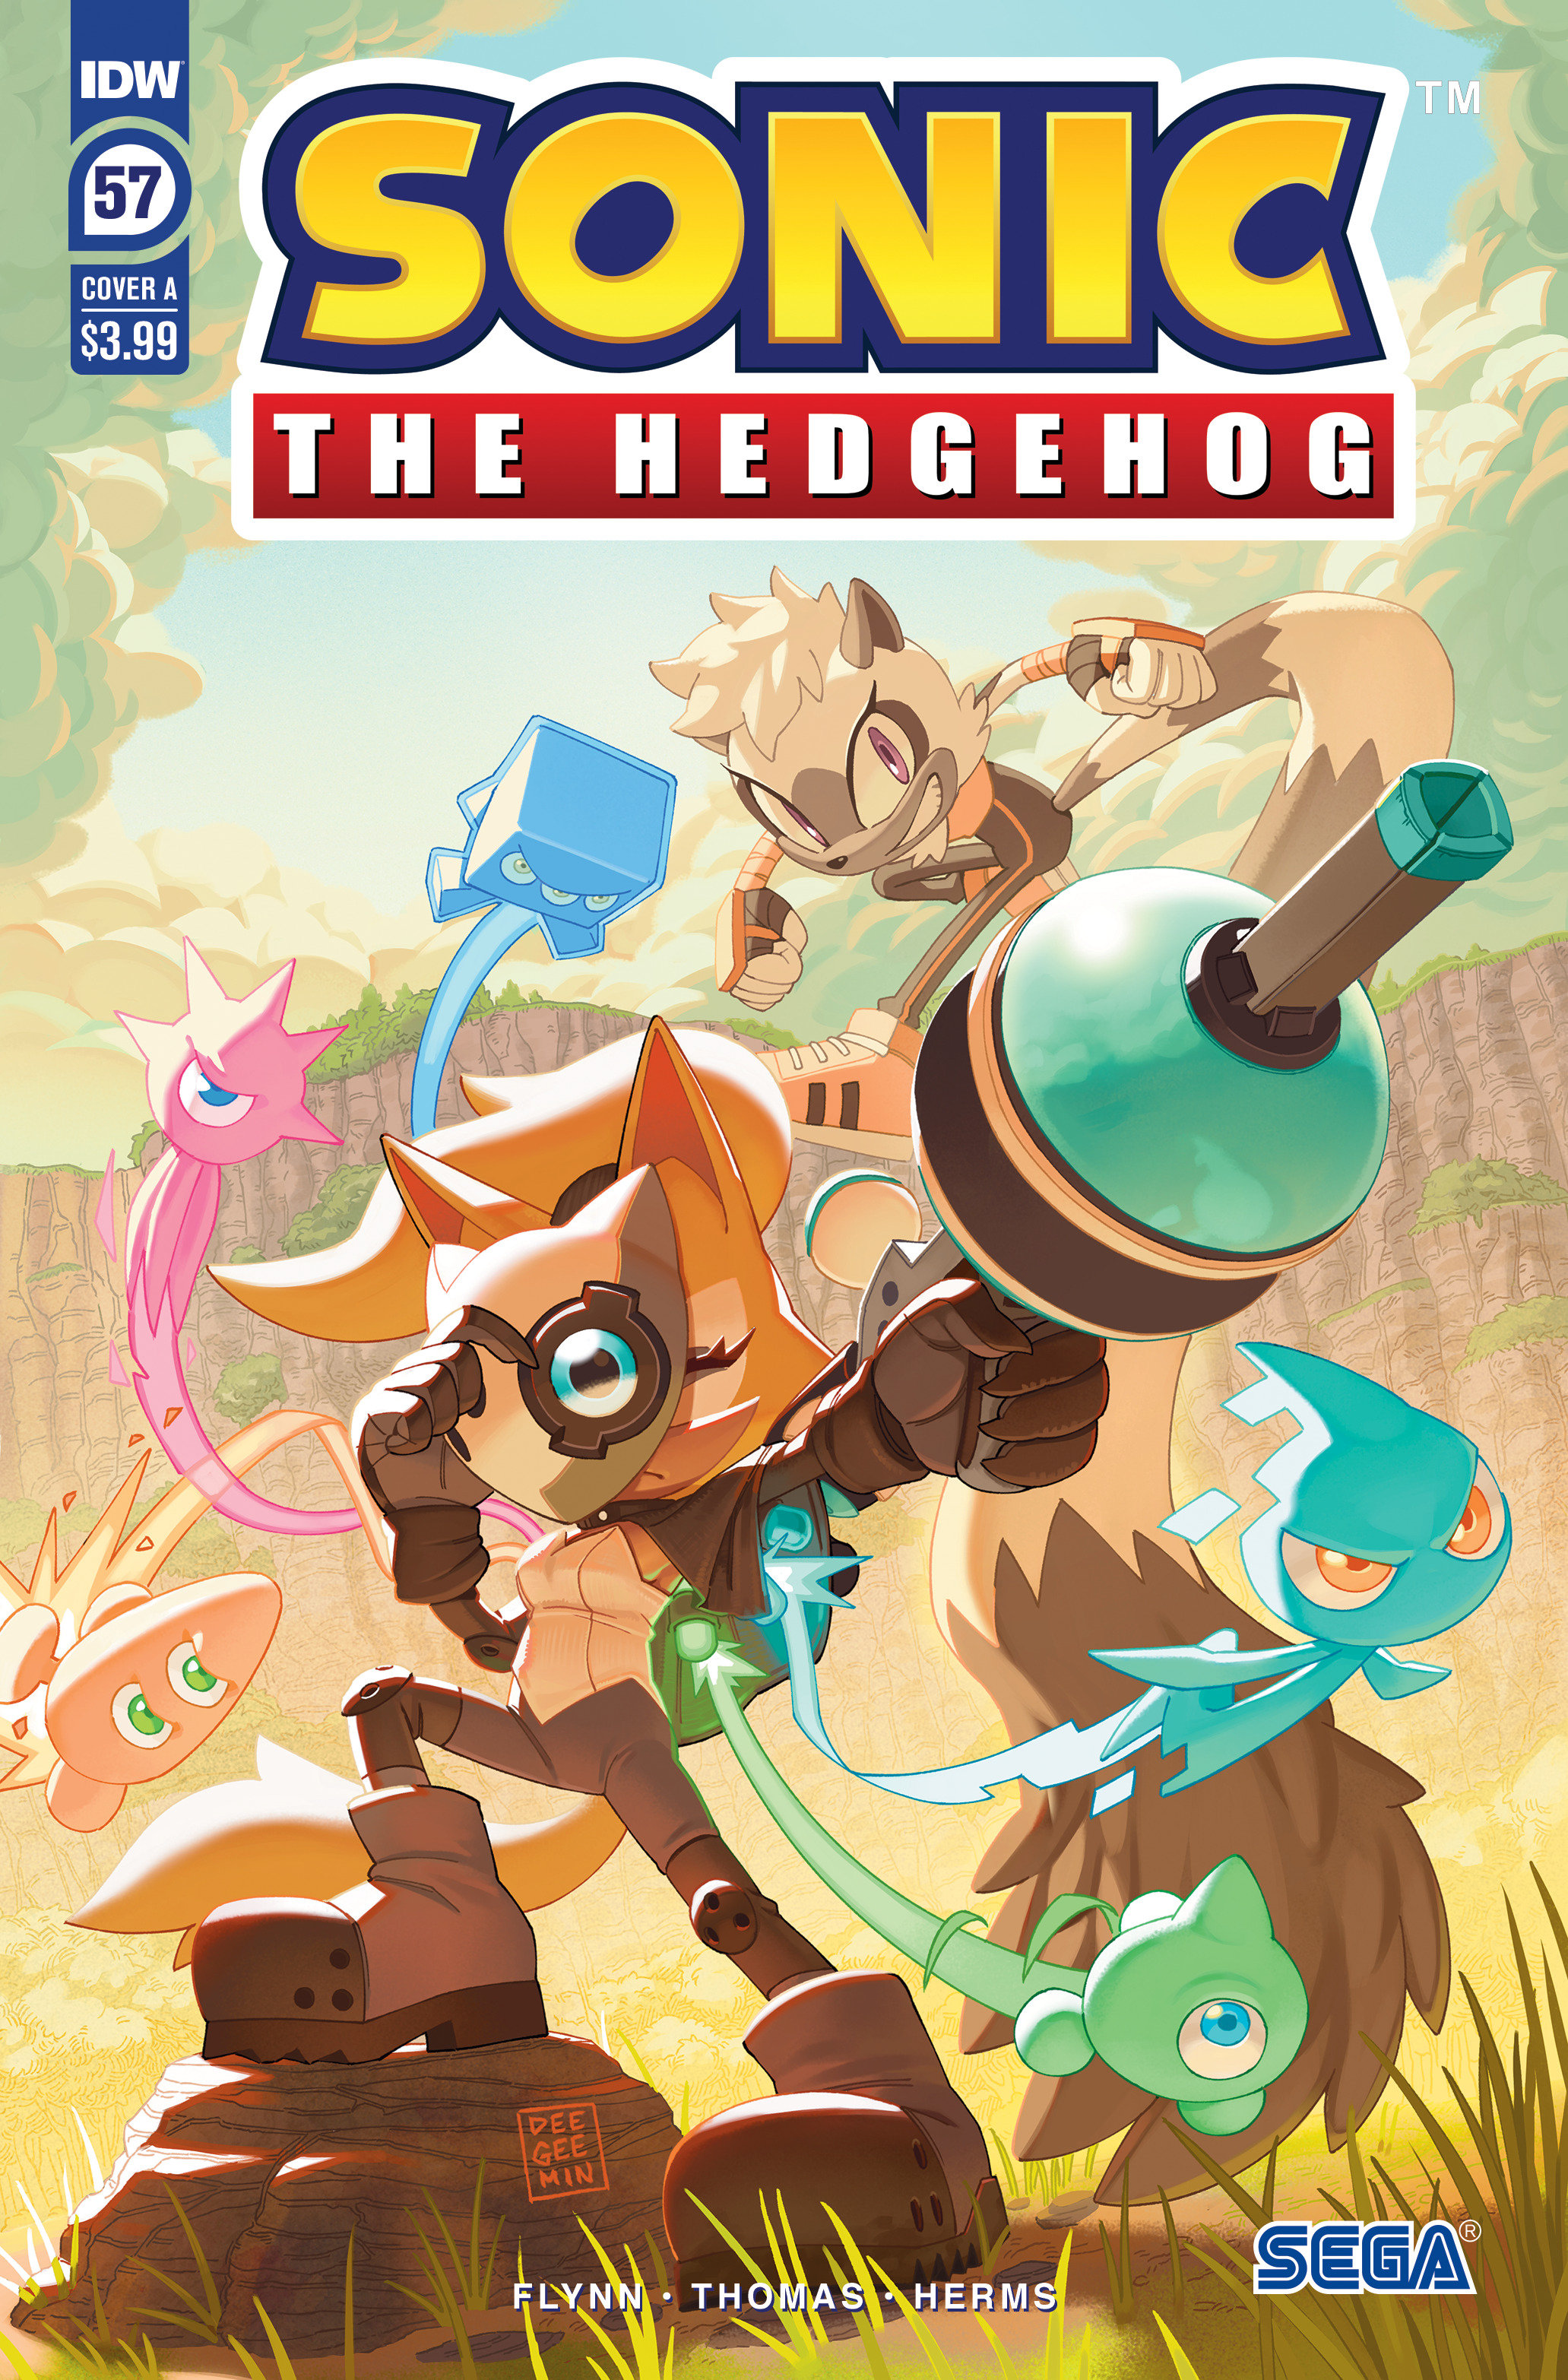 Sonic the Hedgehog #57 Cover A Kim